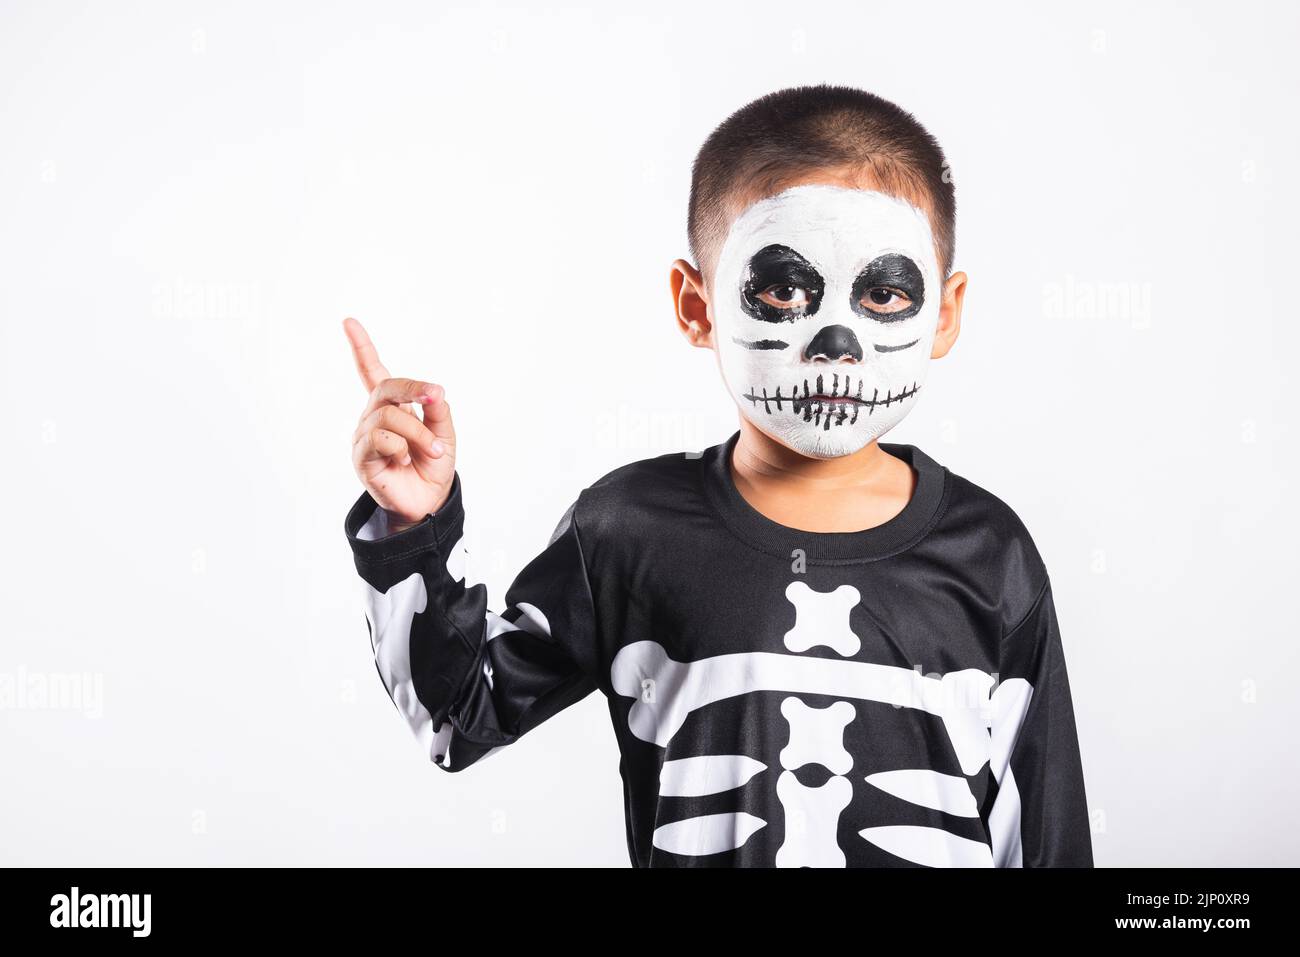 skeleton face paint toddler